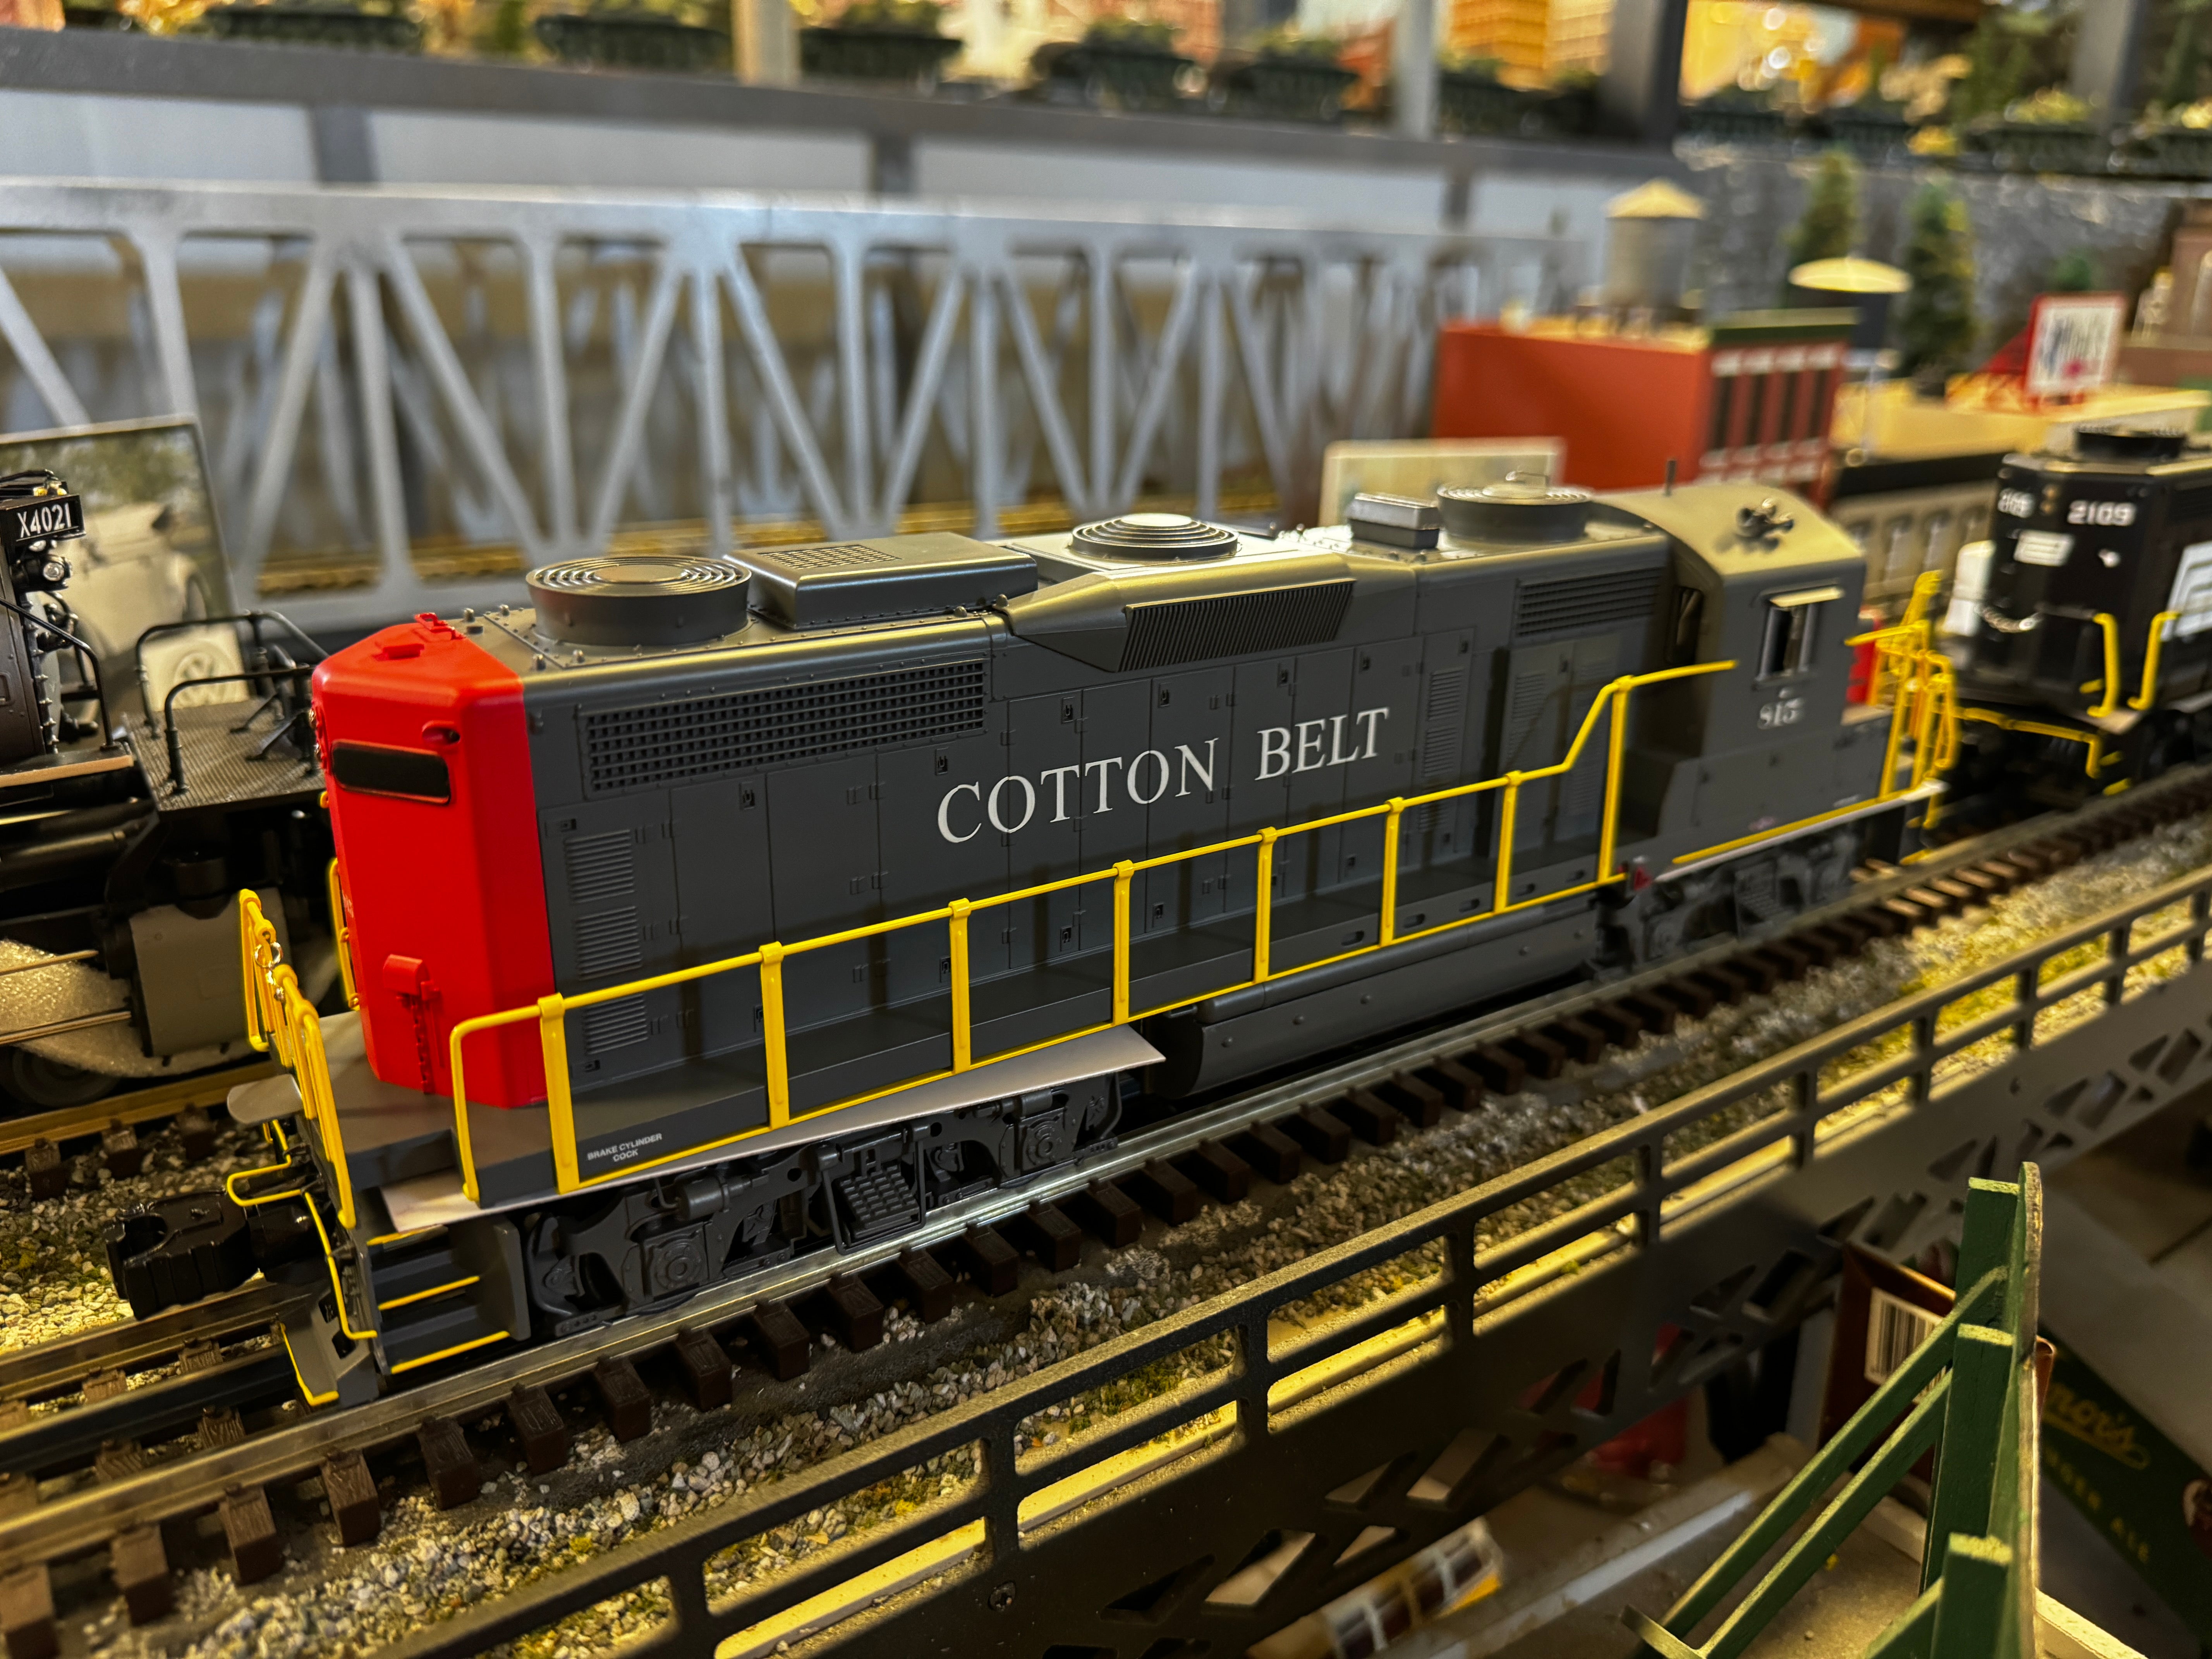 Lionel 2333591 - Legacy GP20 Diesel Locomotive "Cotton Belt" #801